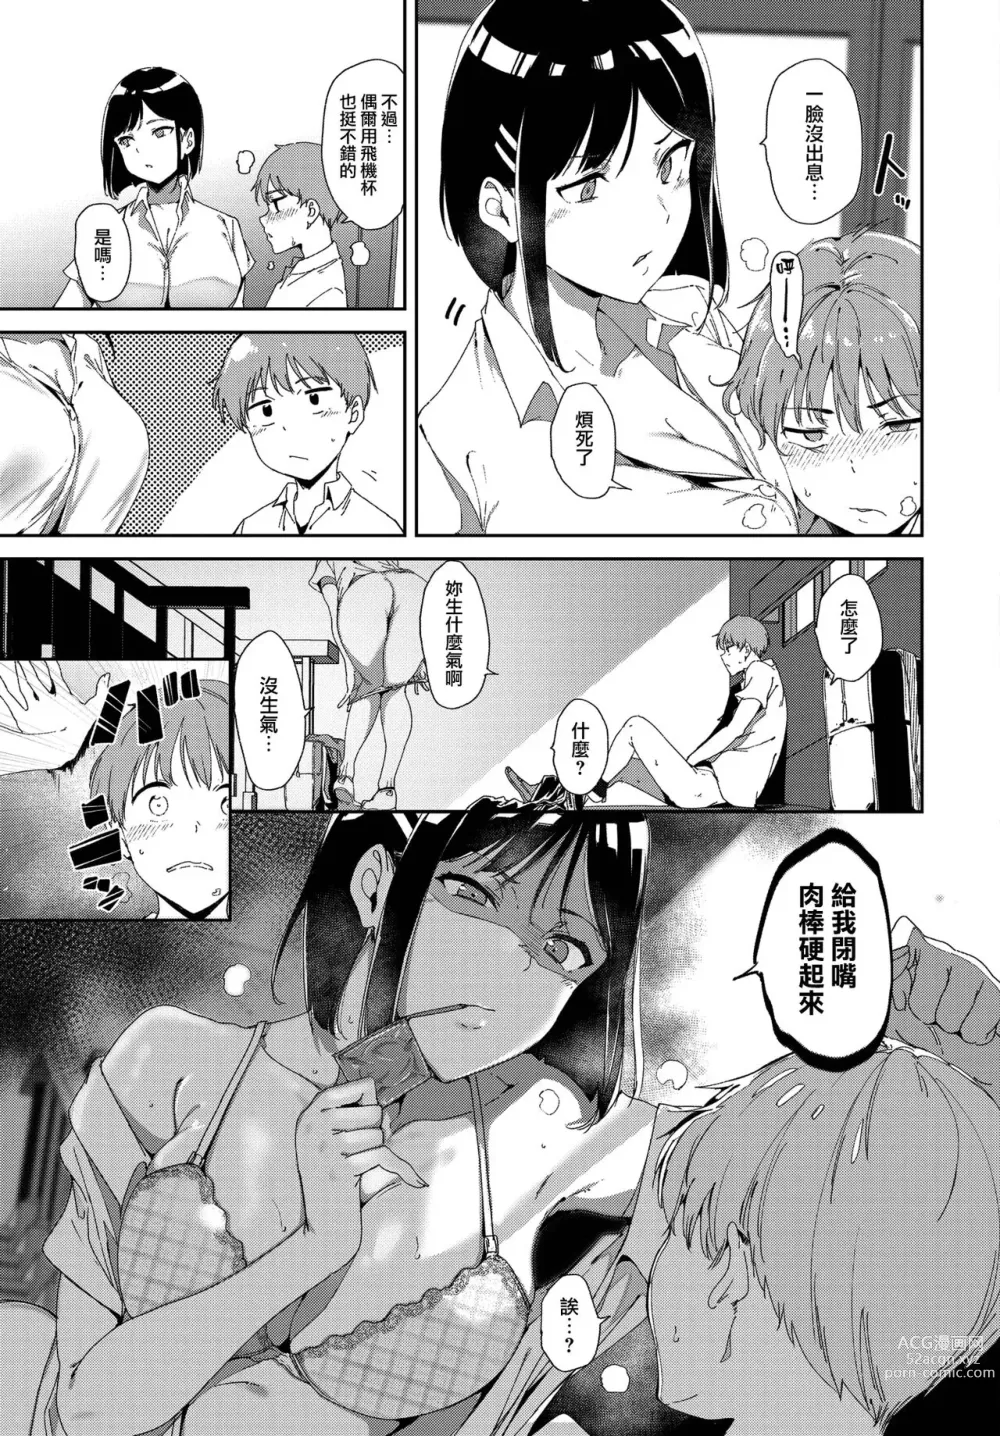 Page 8 of manga Routine 2